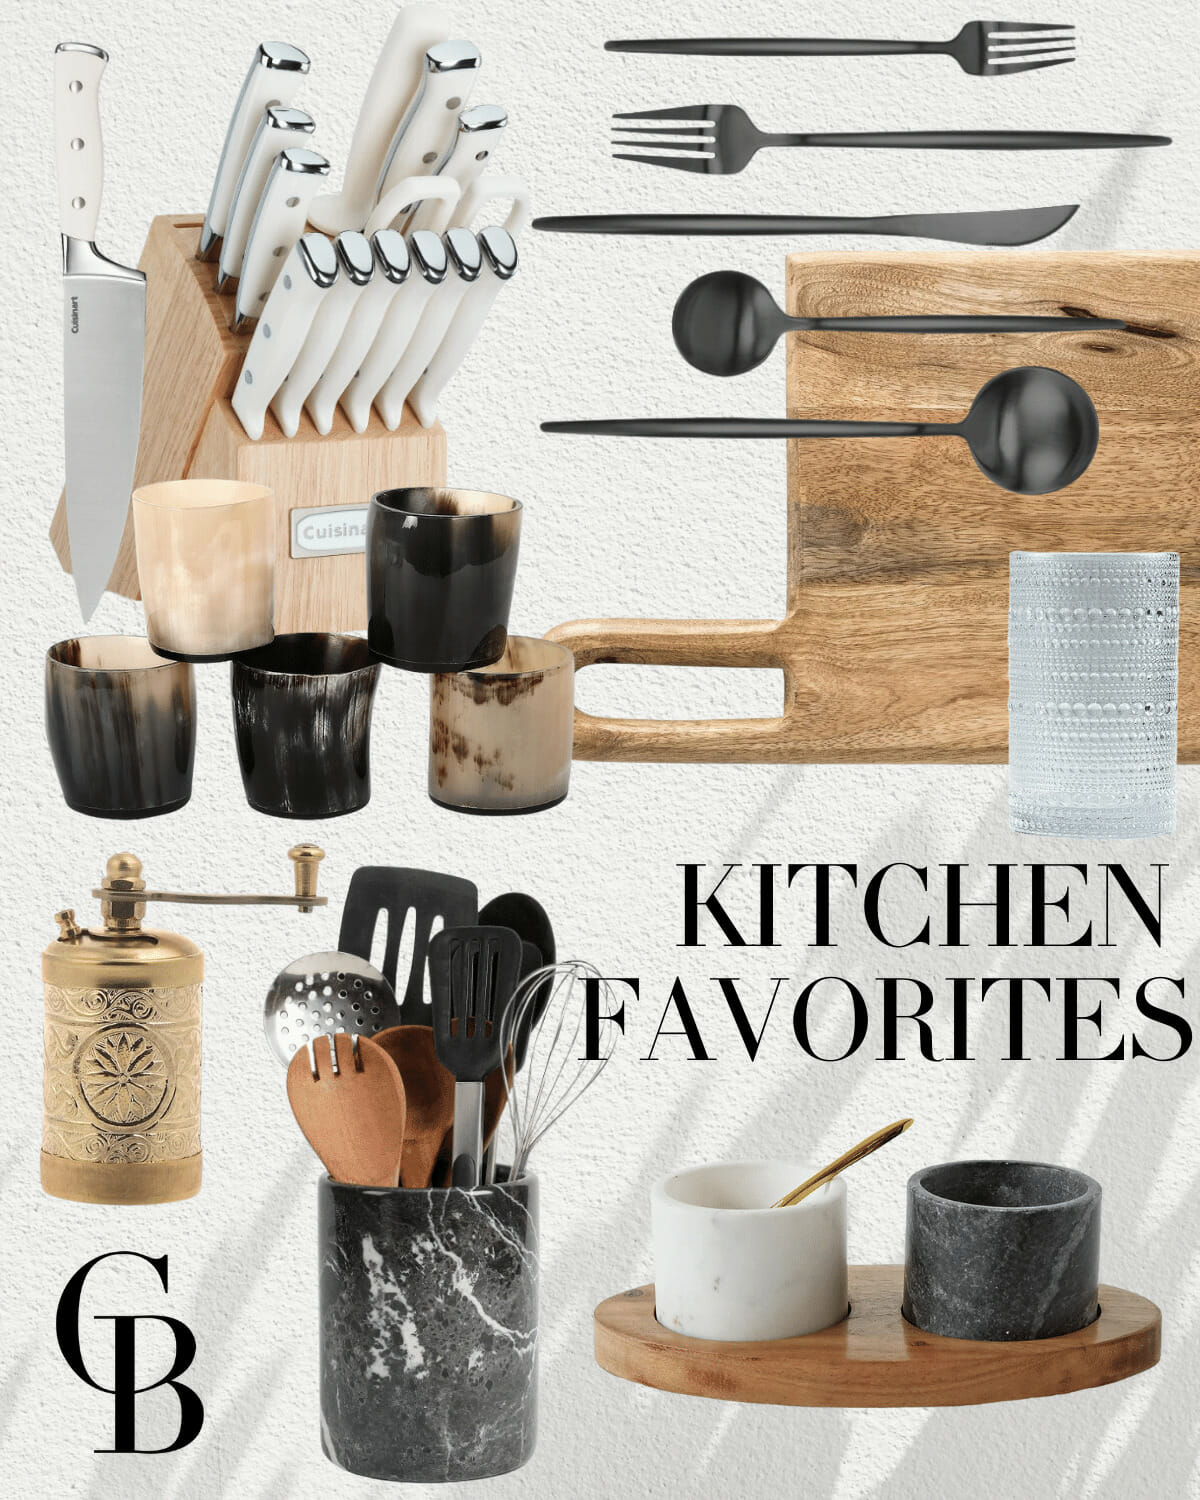 Kitchen Favorites #Amazon #Silverware #Utensils #Kitchen #Decor #Marble #Wood #SaltandPepper #Coffee #Knives #Shotglasses #kitchen #kitchenessentials #home